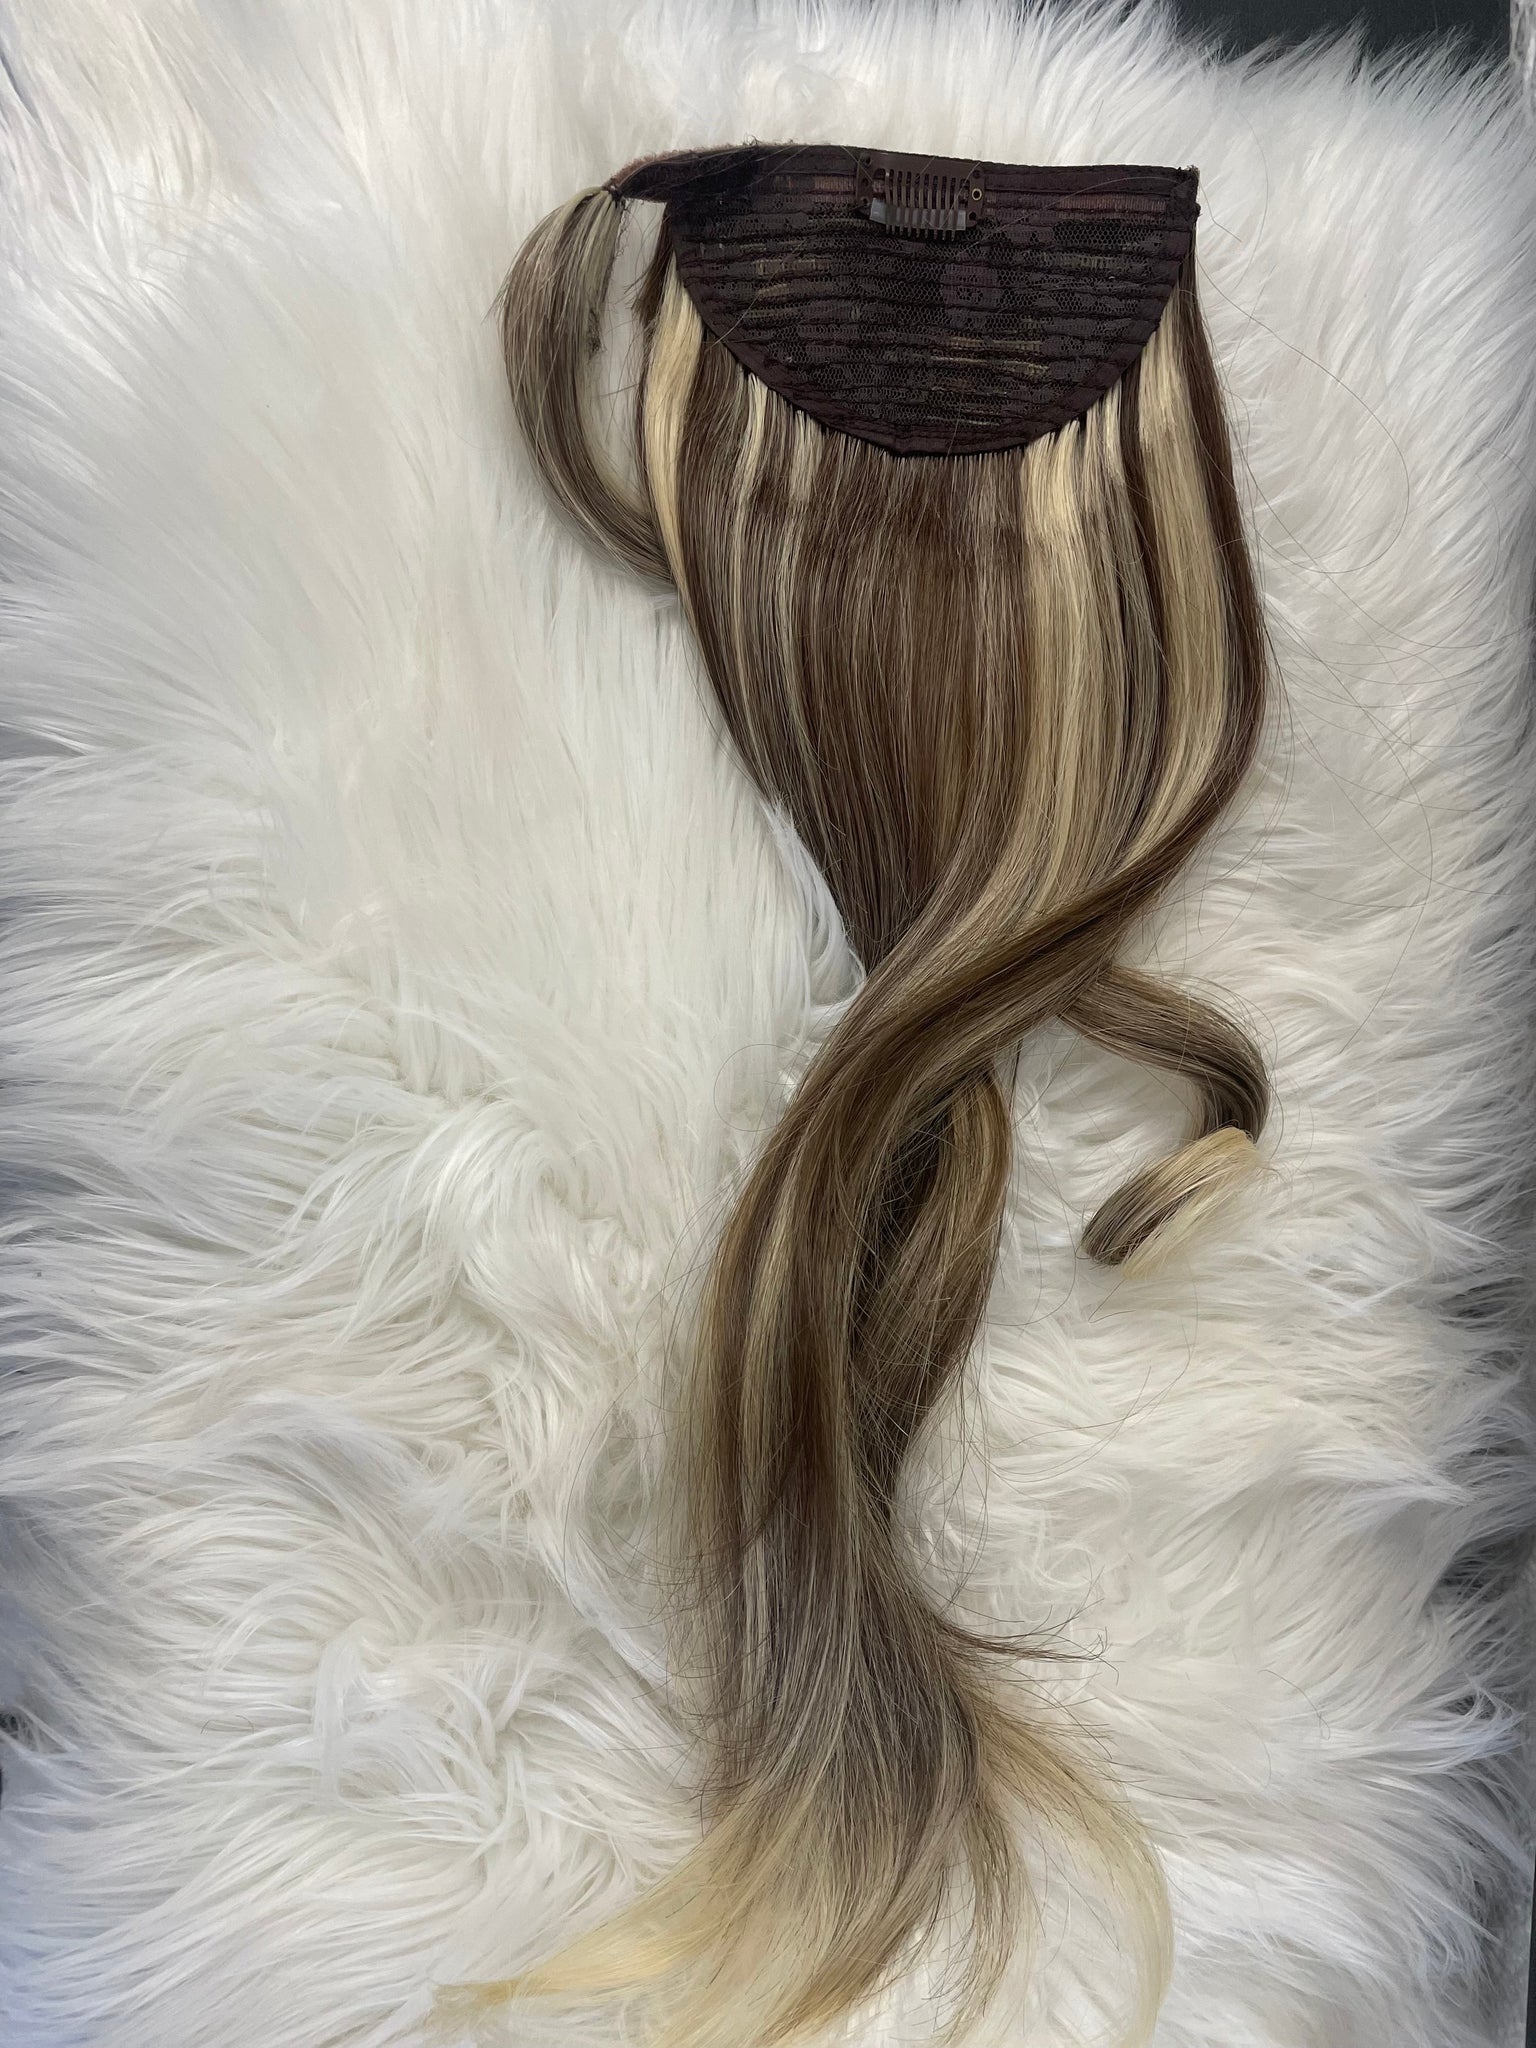 Flora - Ponytail / 20 inch / European hair